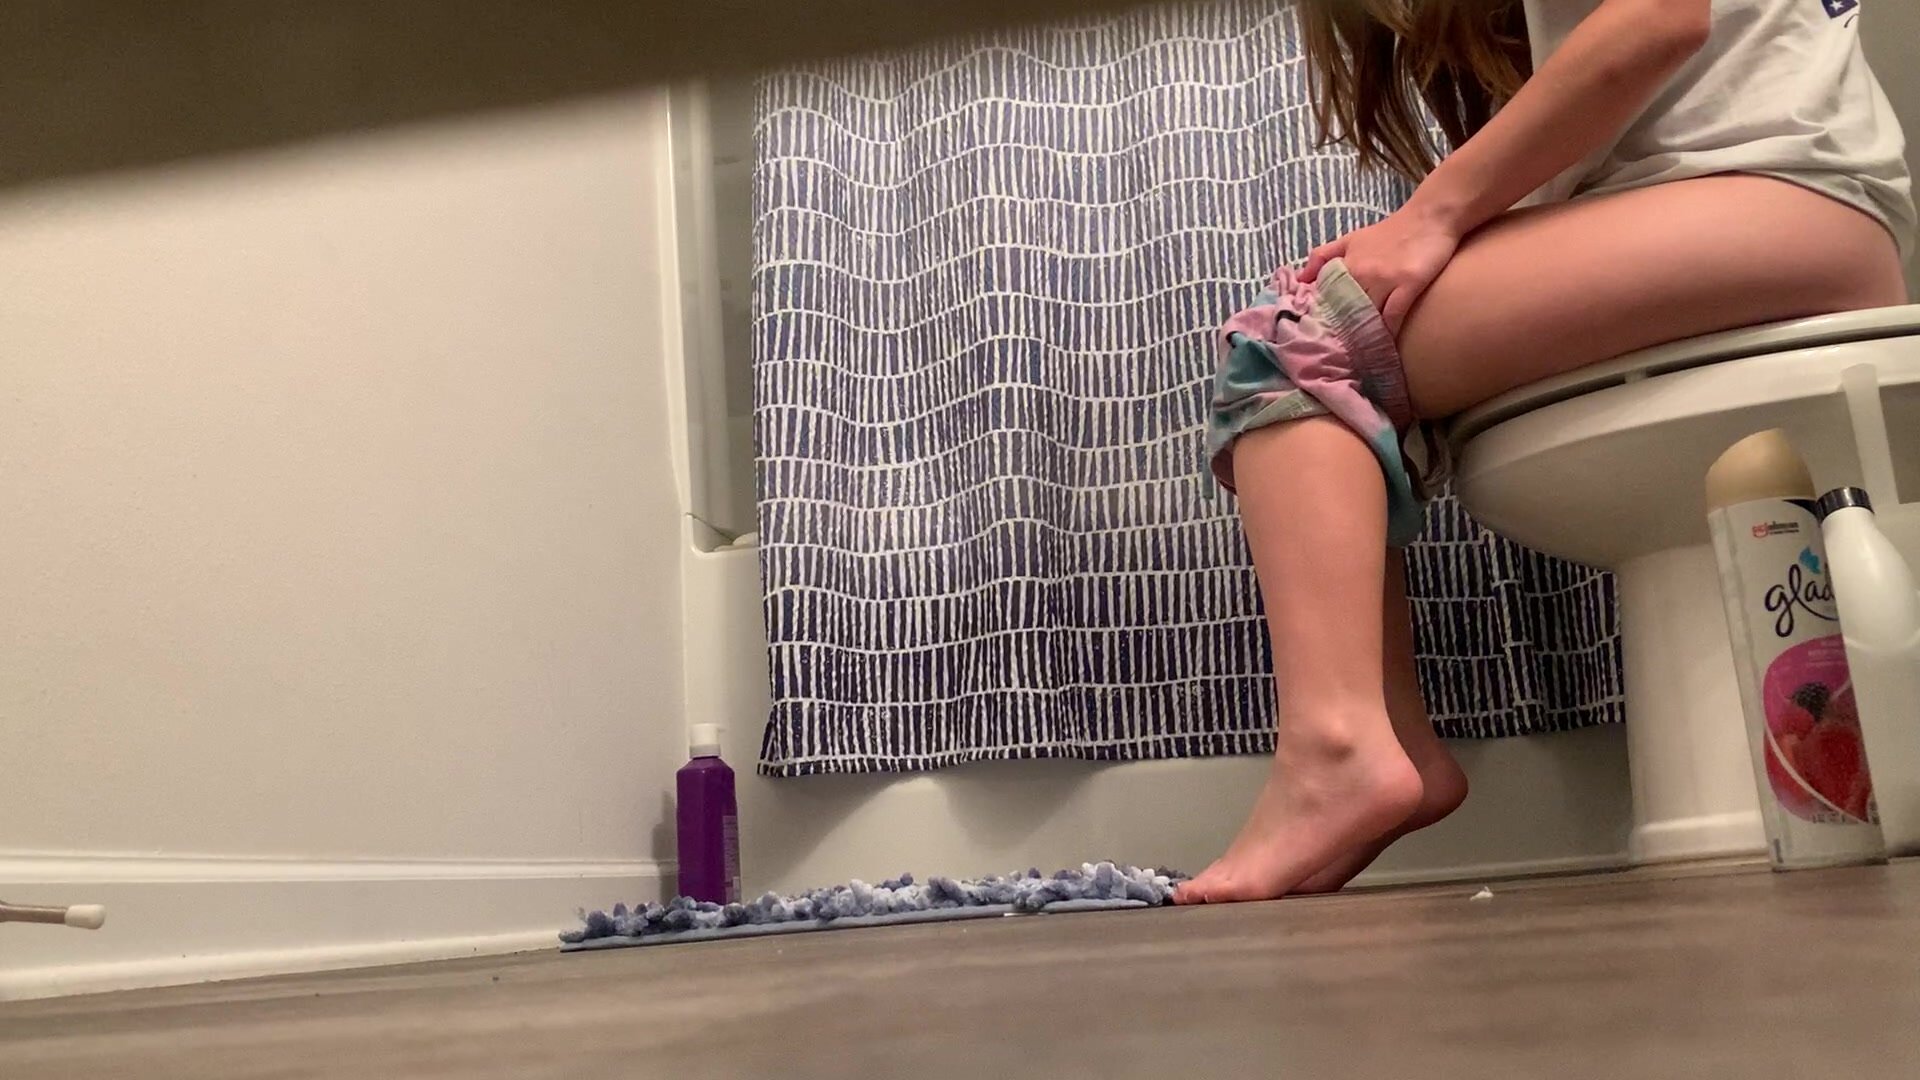 Underdoor voyeur of another sister friend peeing photo